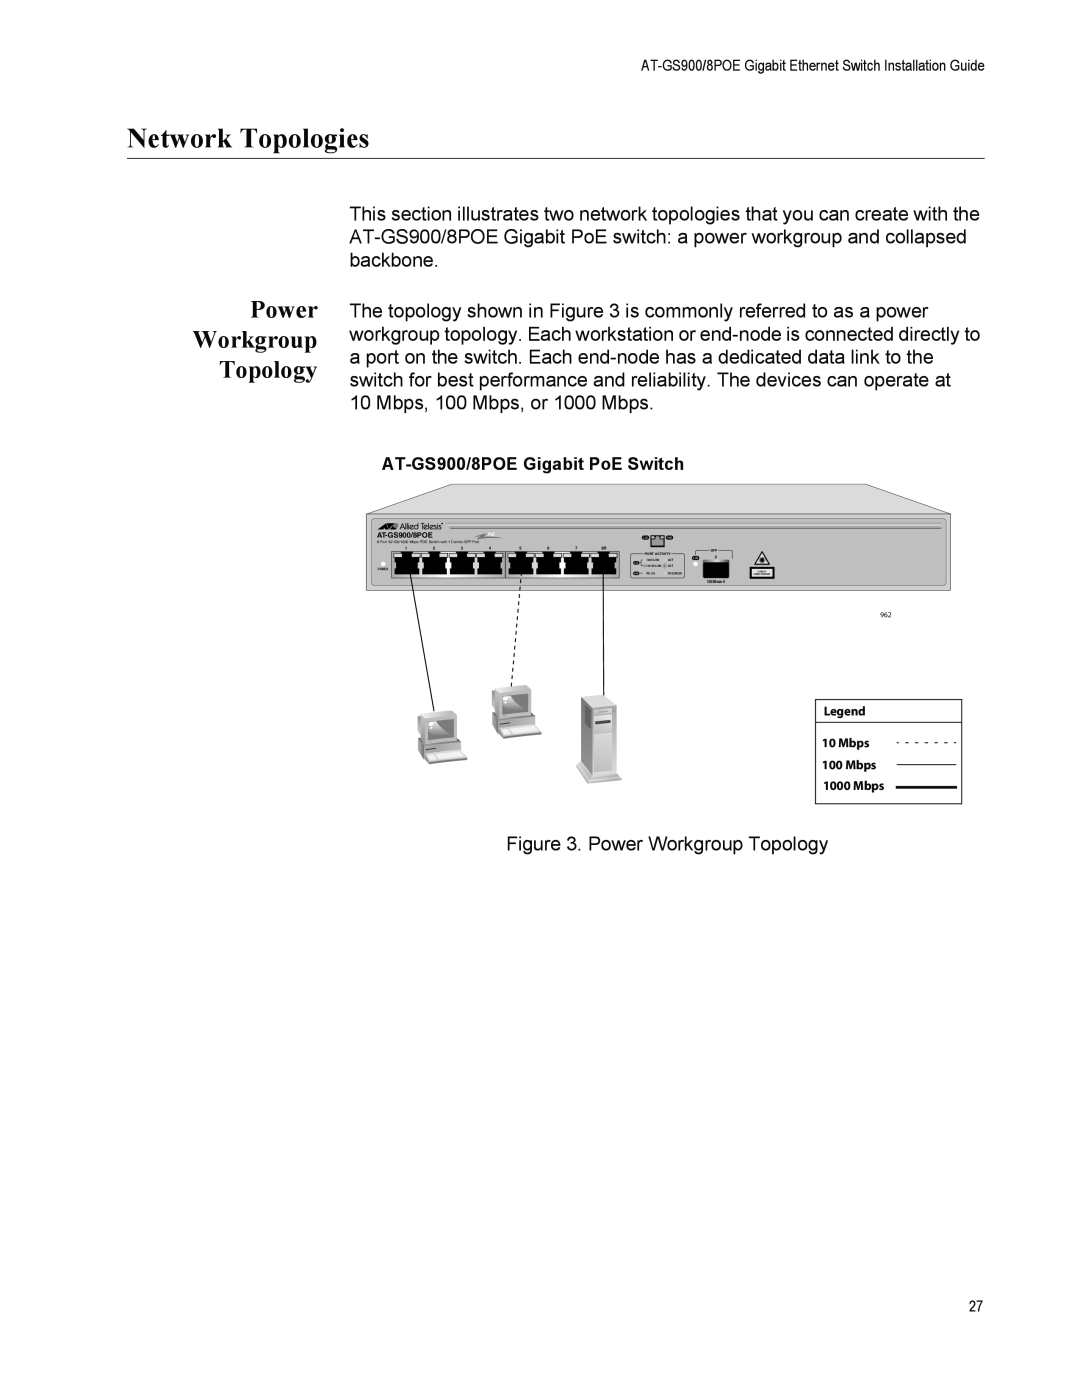 Allied Telesis GS900/8POE manual Network Topologies, Power Workgroup Topology 